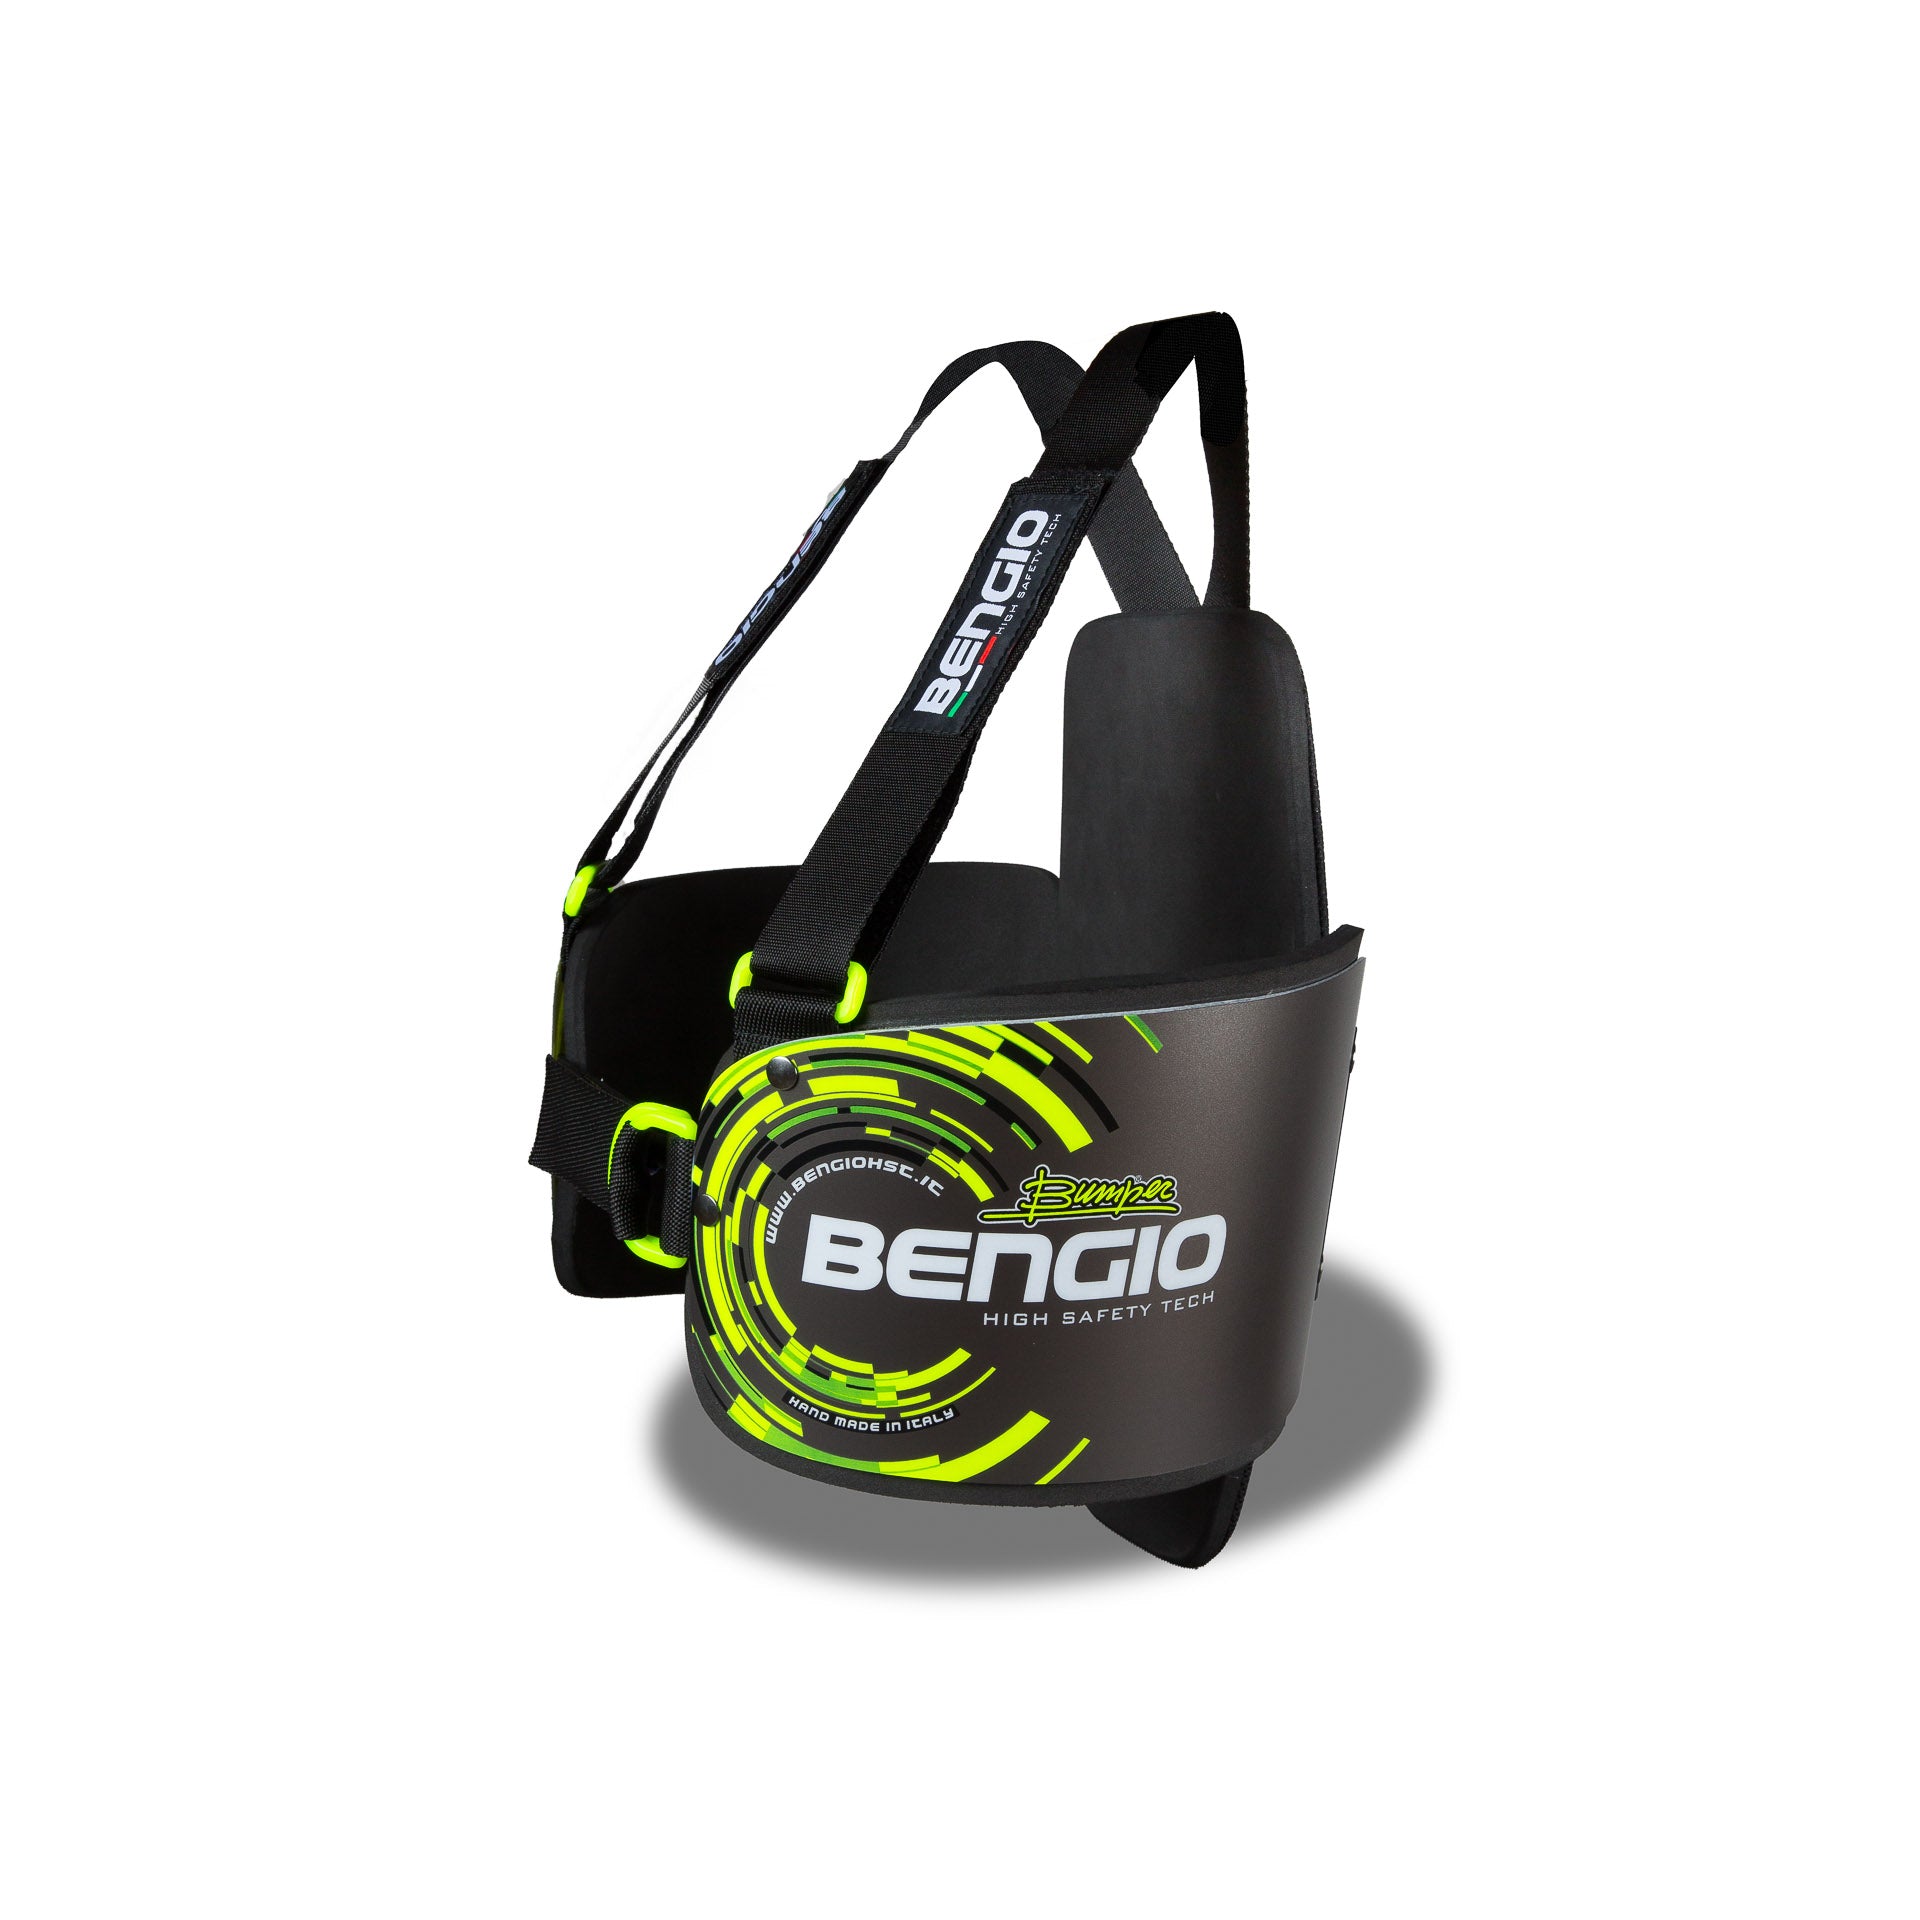 BENGIO STDPLMGY BUMPER Plus Захист ребер для картингу, сірий/флюор. жовтий, розмір M Photo-1 